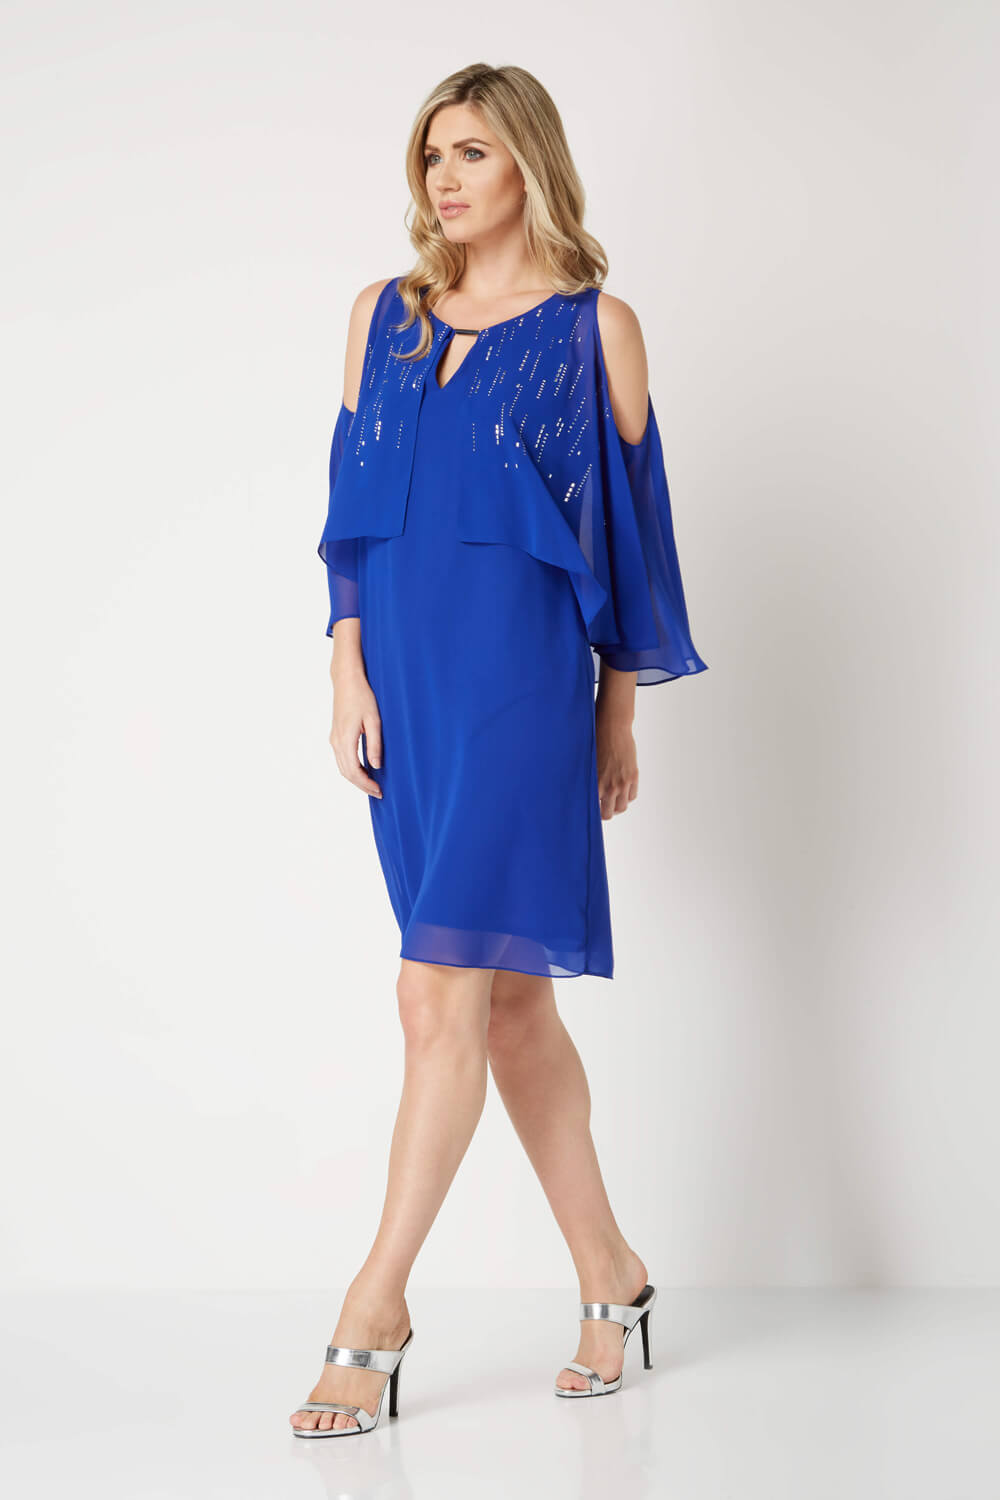 Sparkle Chiffon Overlay Dress in Royal Blue - Roman Originals UK